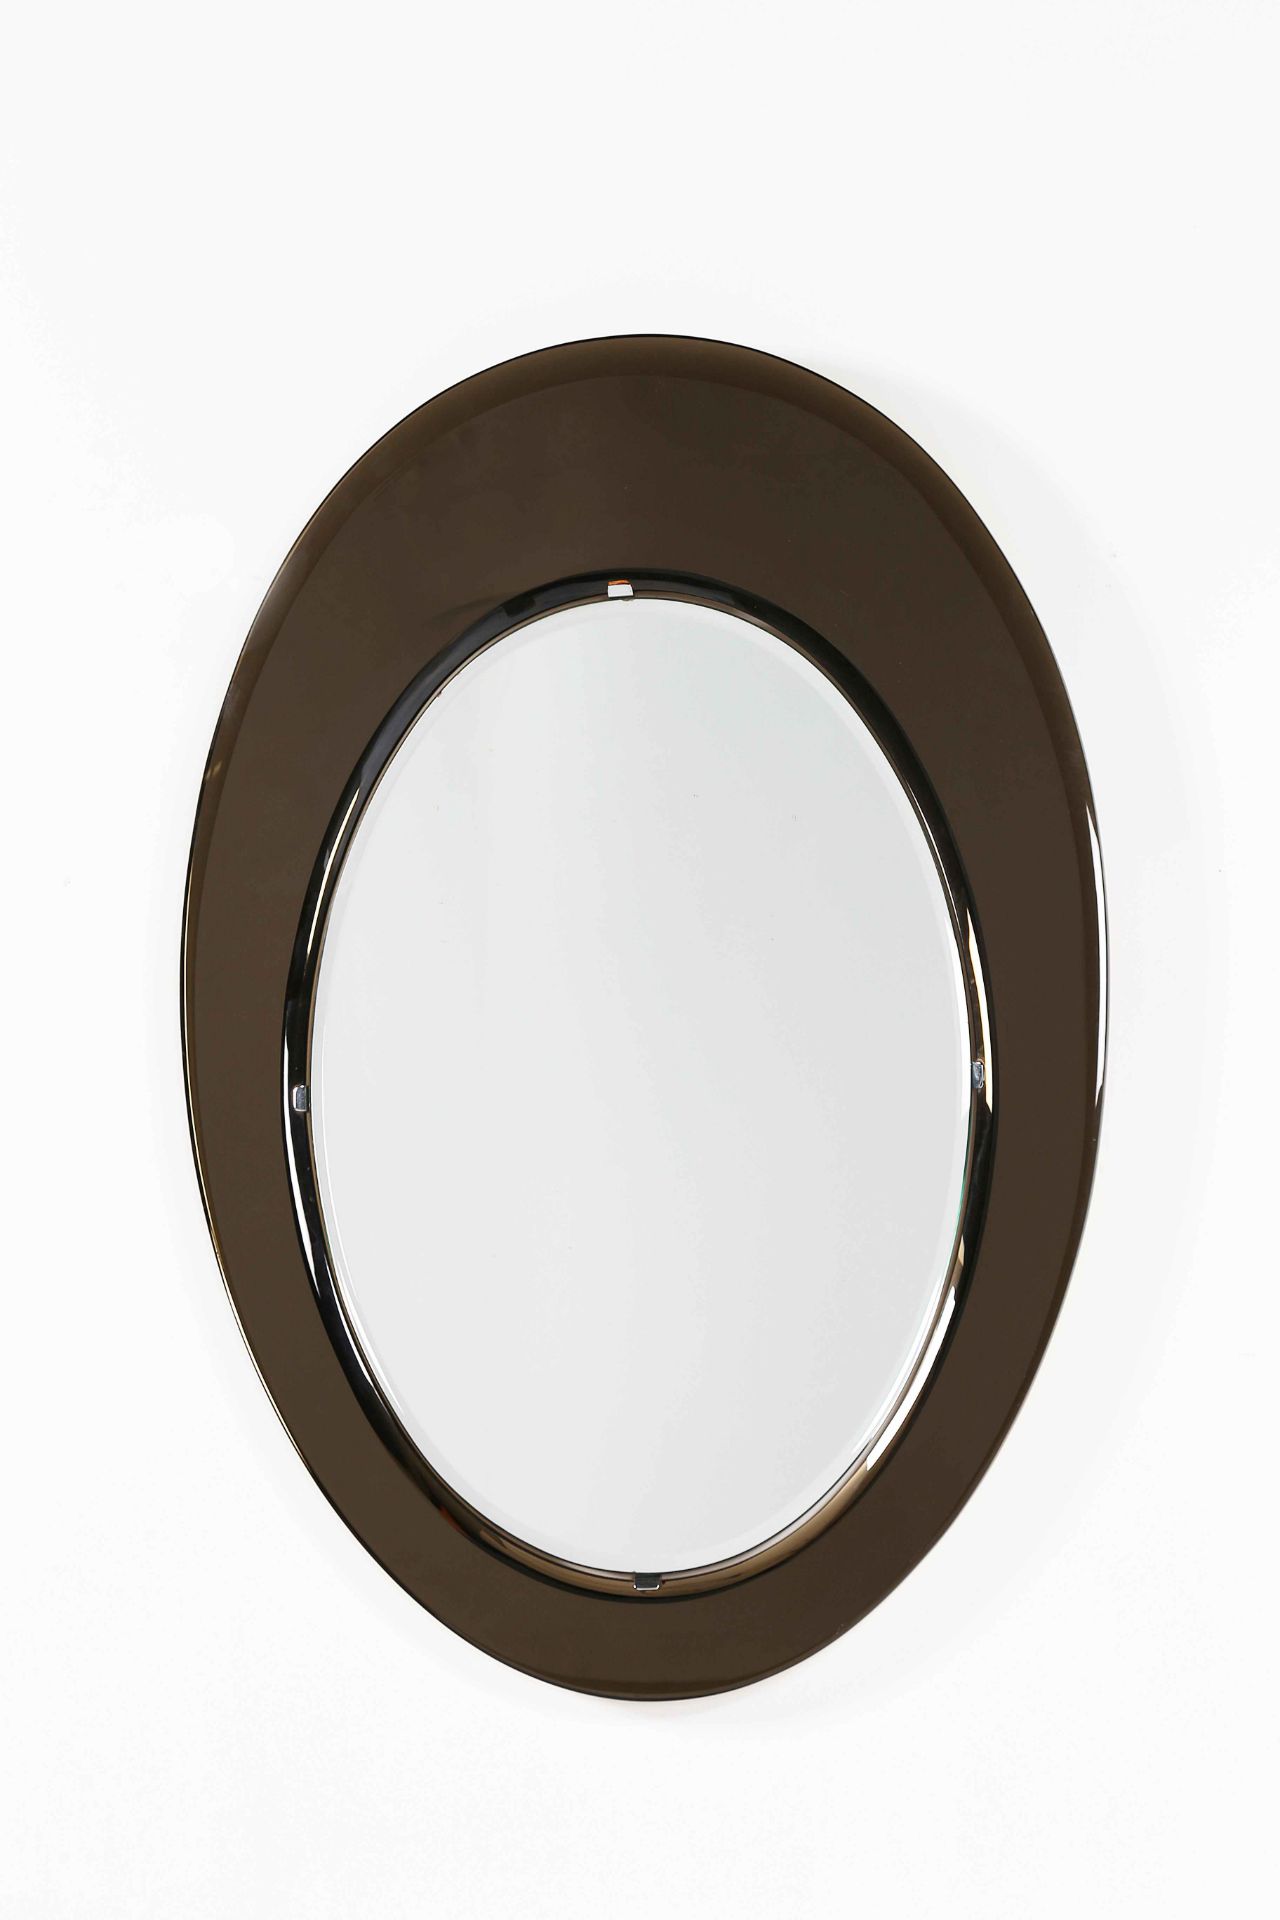 CRISTAL ART TORINO 
Mirror.

64,00 x 92,00 cm